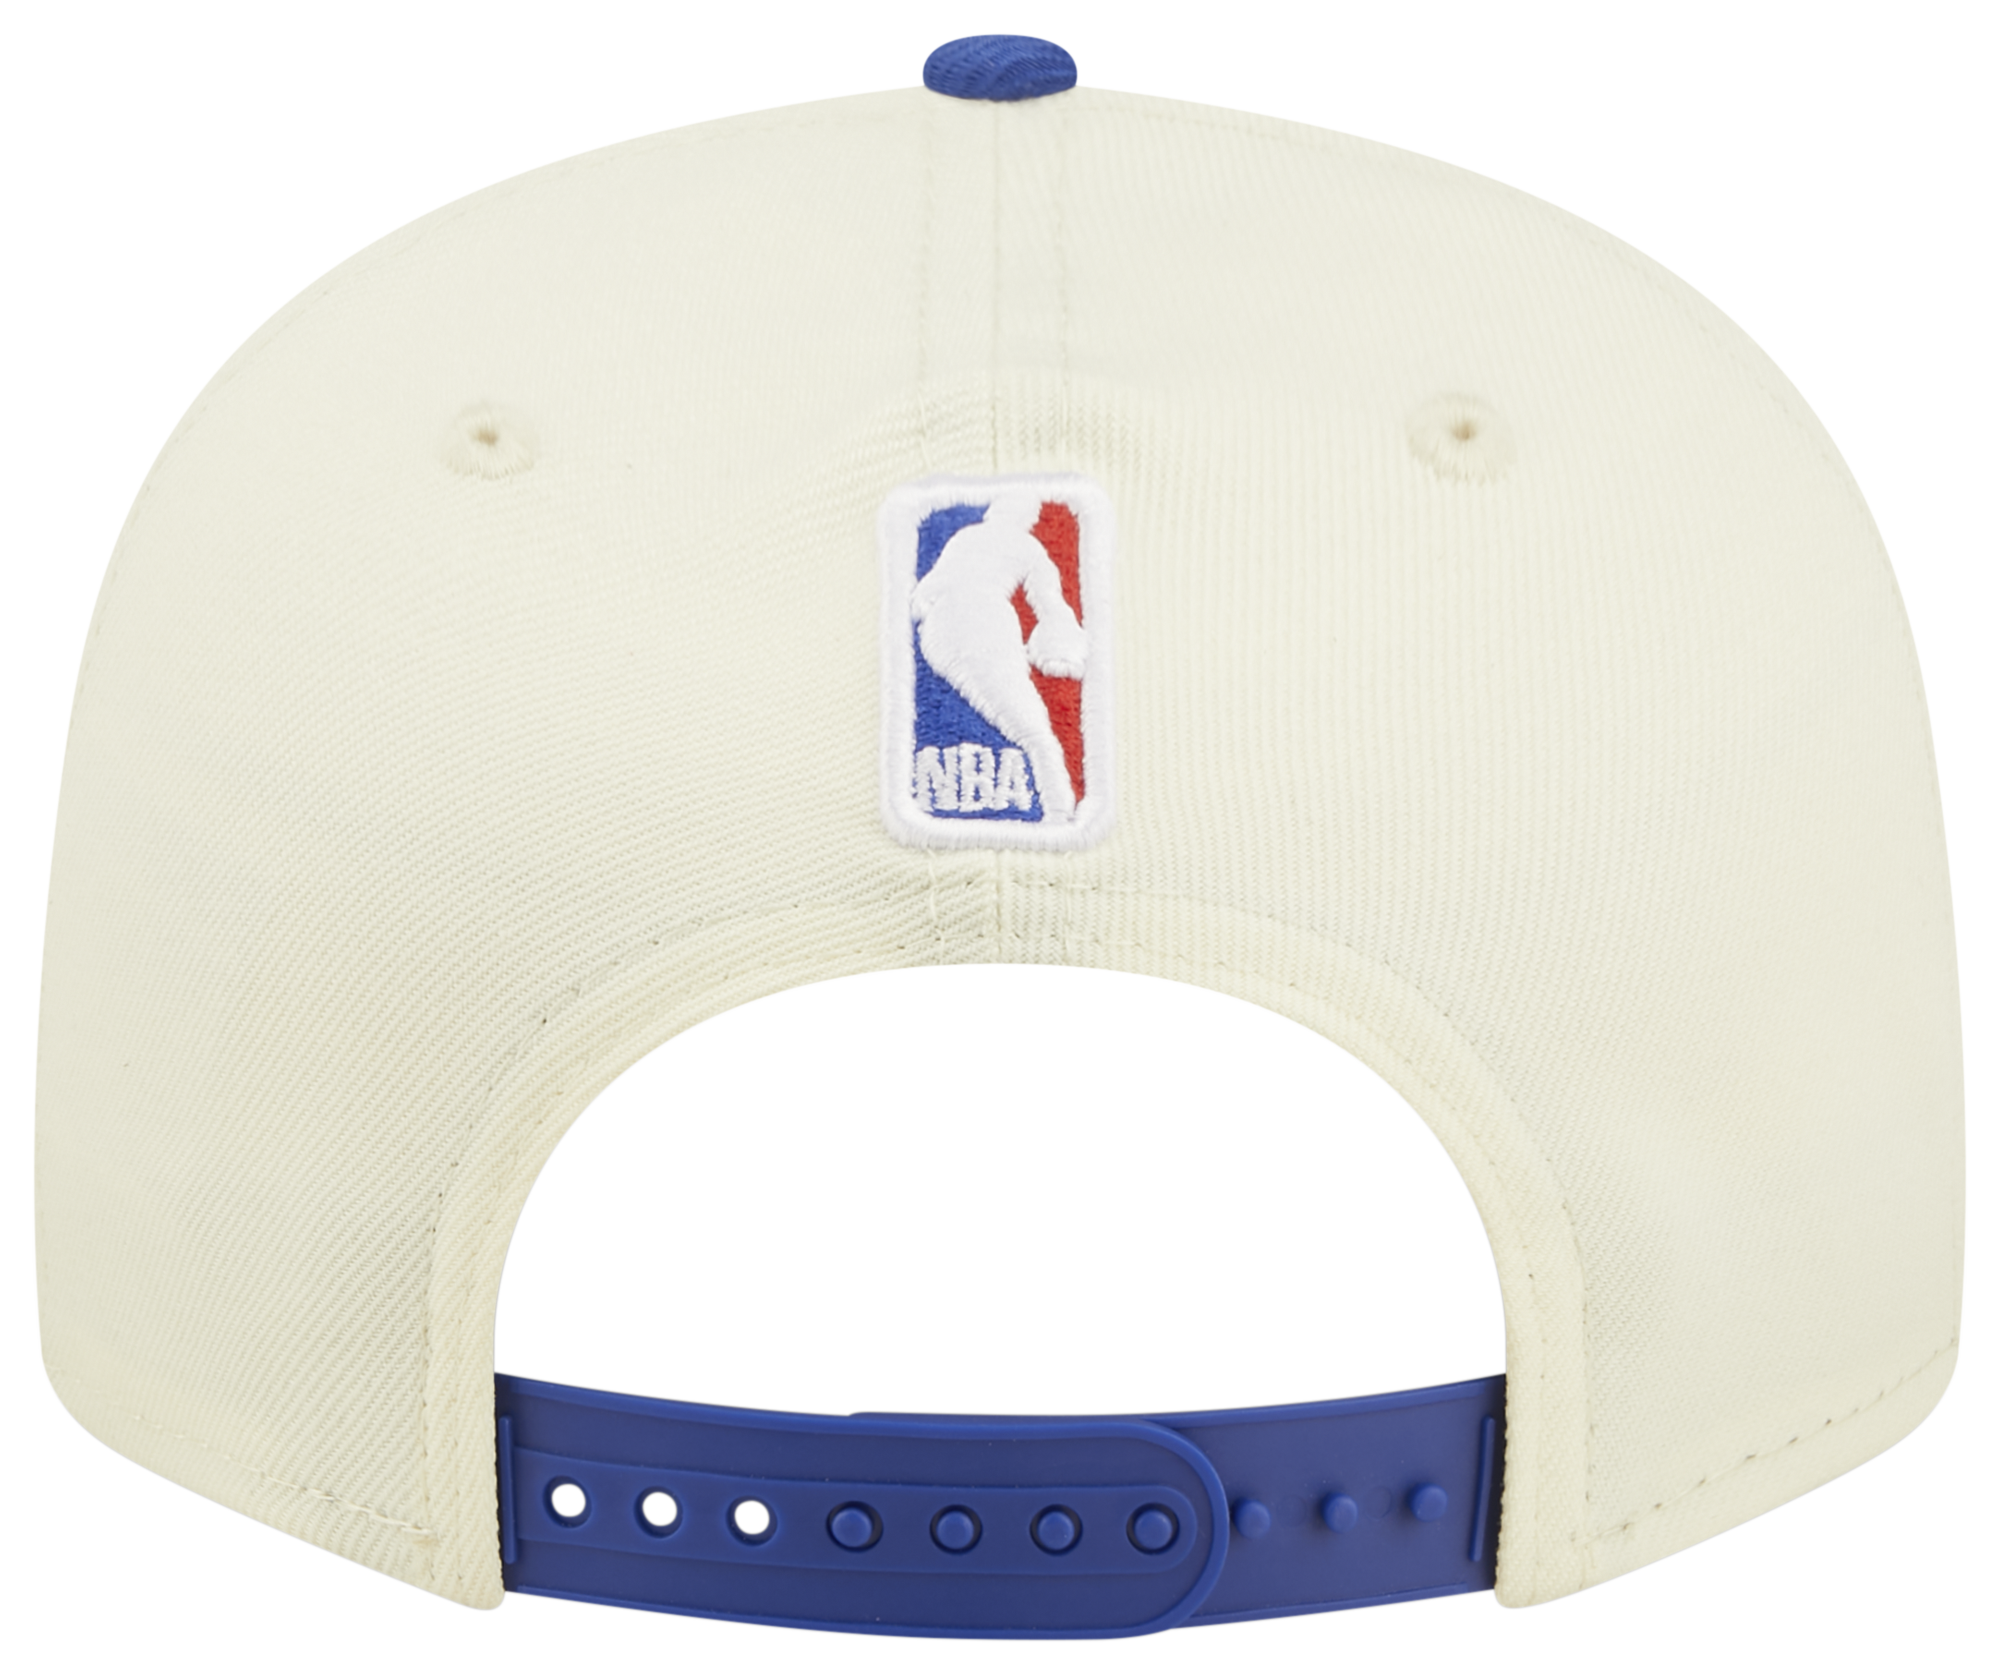 New Era Clippers Draft Snapback Cap